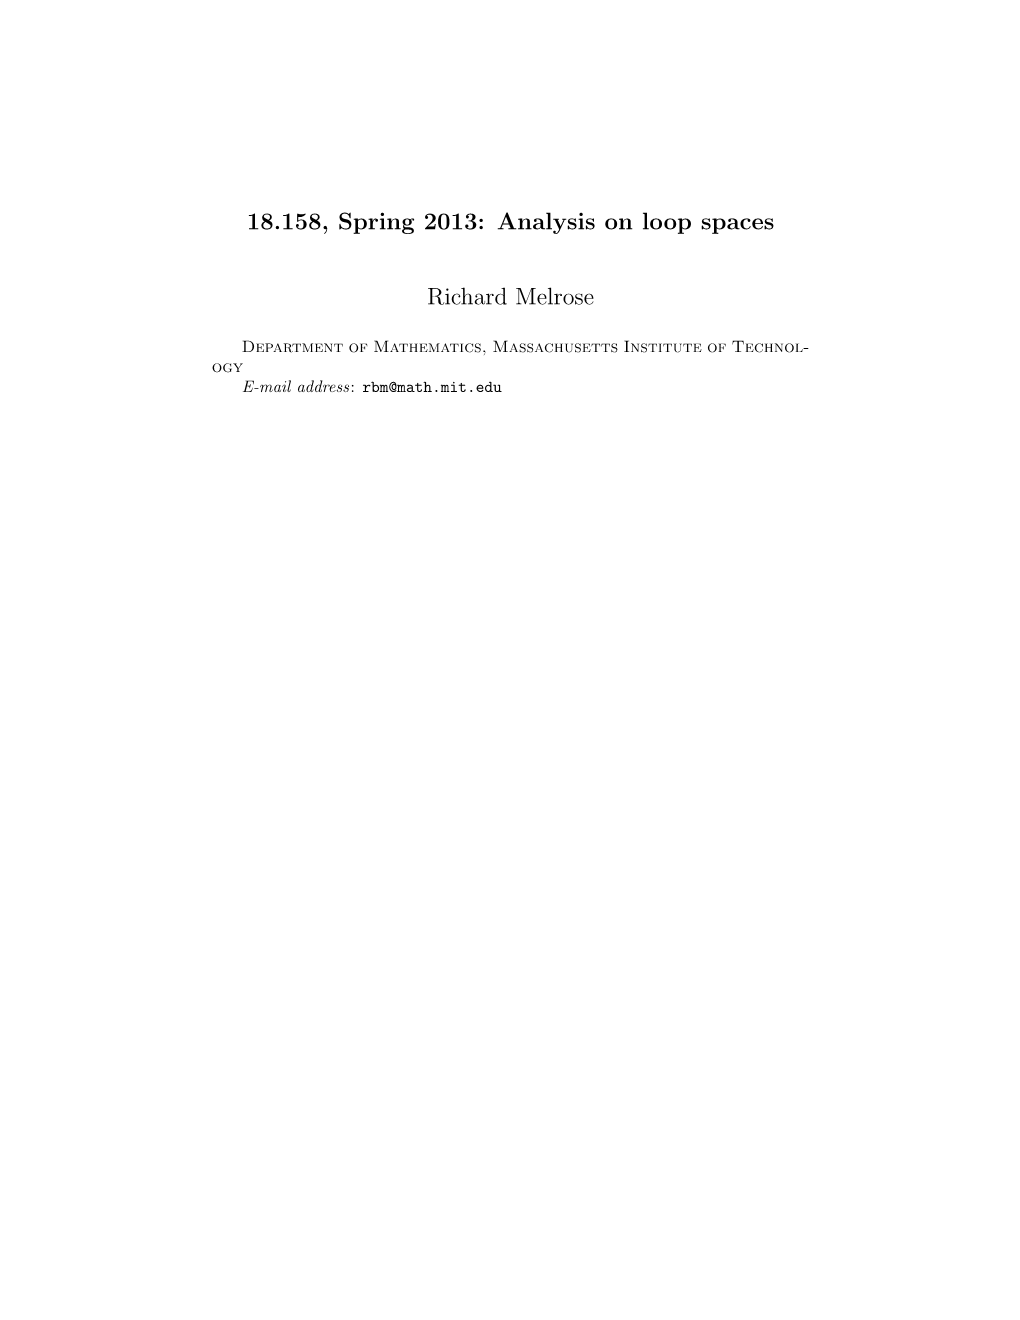 18.158, Spring 2013: Analysis on Loop Spaces Richard Melrose